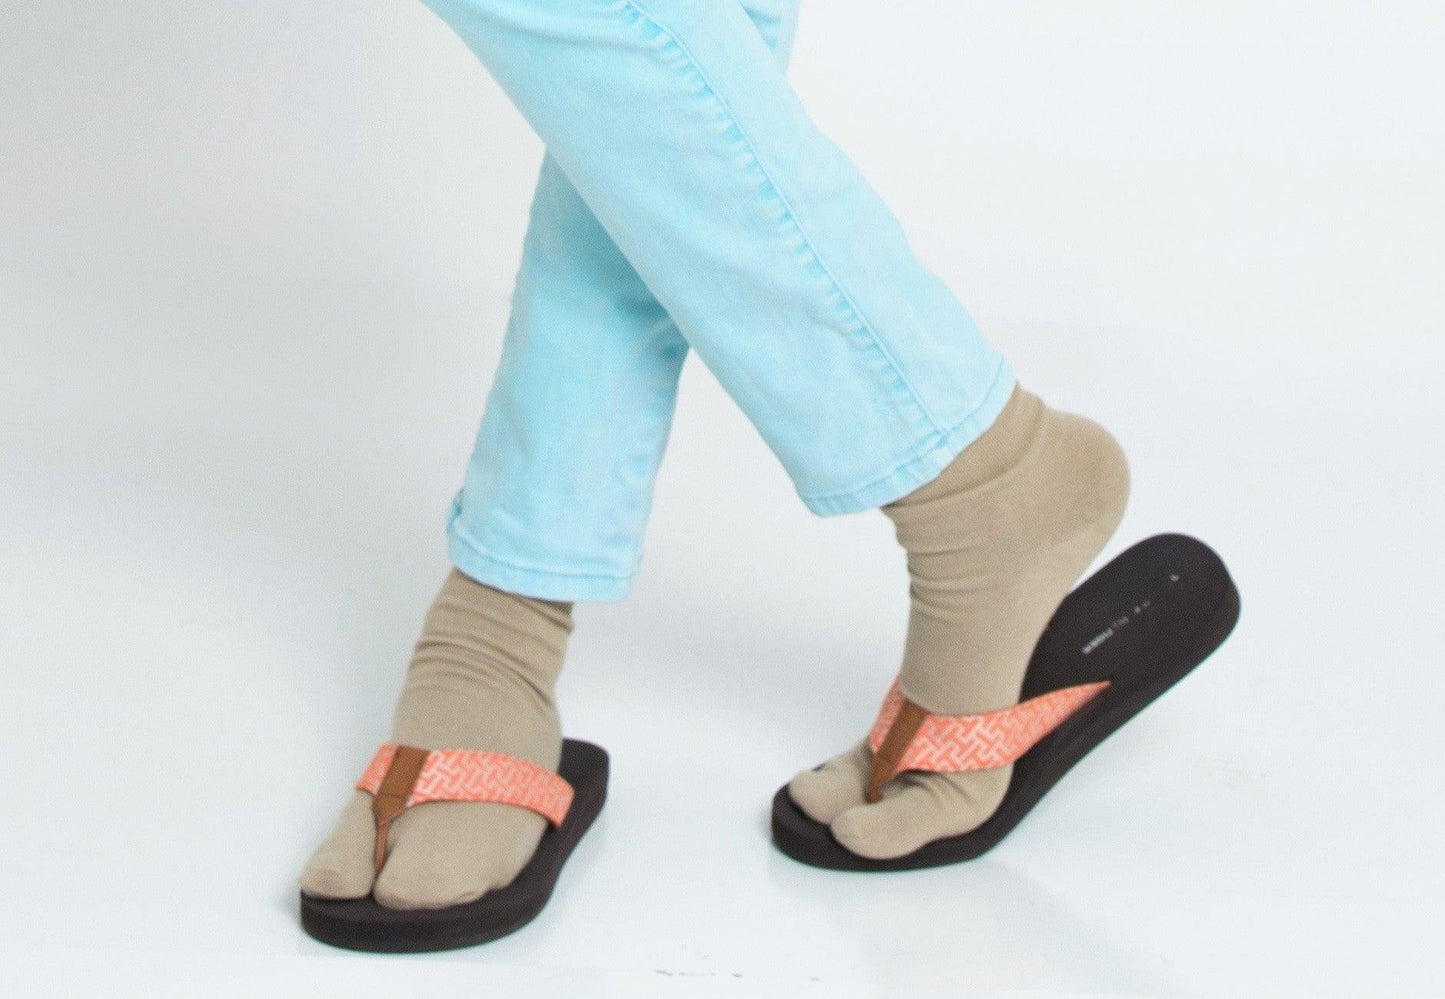 1 Pair - V-Toe Flip Flop Tabi Socks - Khaki Solid Casual by V-Toe Socks, Inc - The Hammer Sports